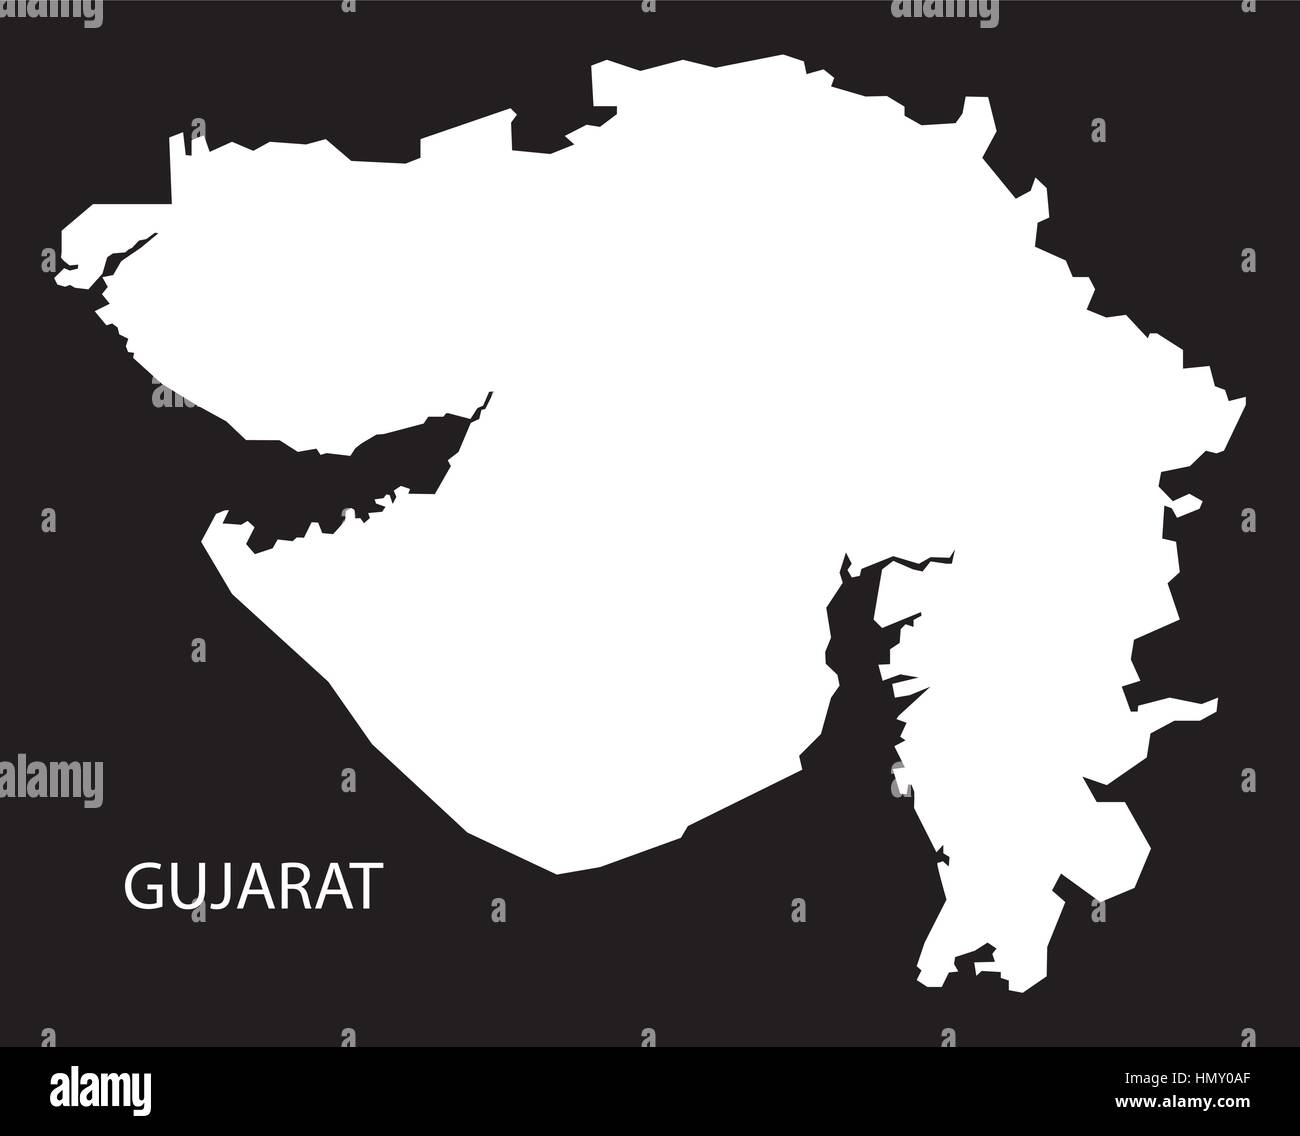 Gujarat Indien Karte schwarz invertiert silhouette Stock Vektor